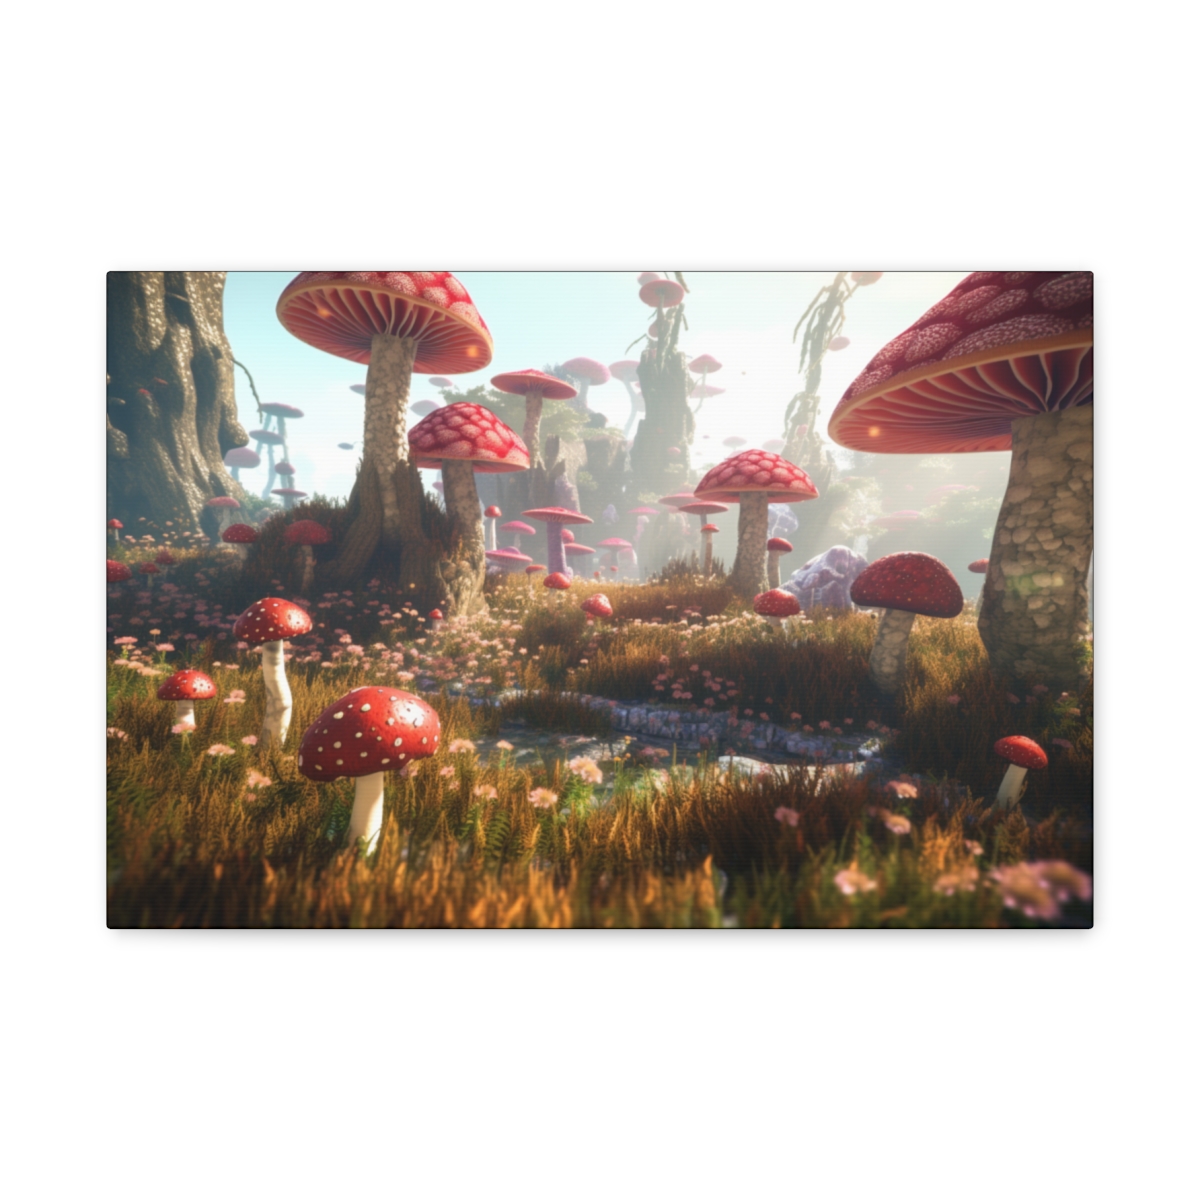 Mushroom Wall Art Canvas Print: Colossal Fungal Fantasy